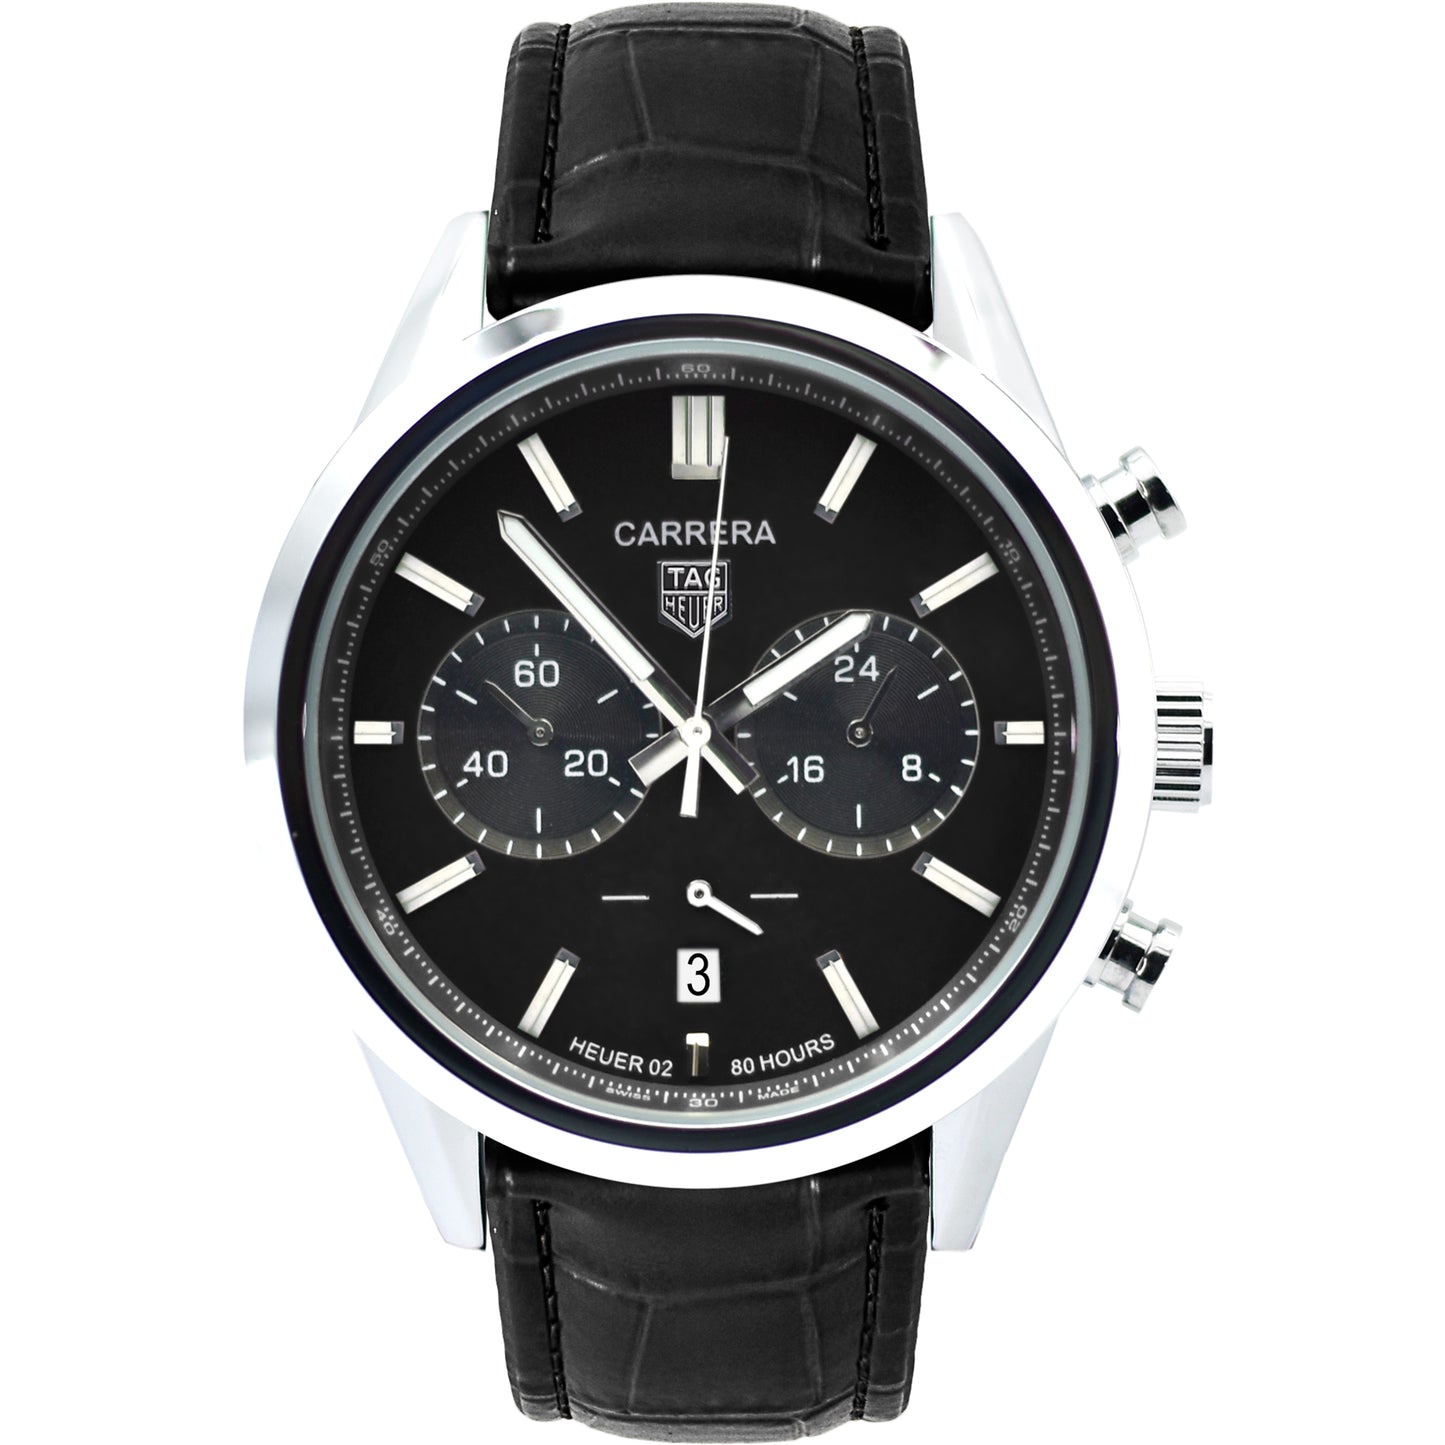 TAG CARRERA Chronograph Quartz Watch | CARA Watch 1090 B